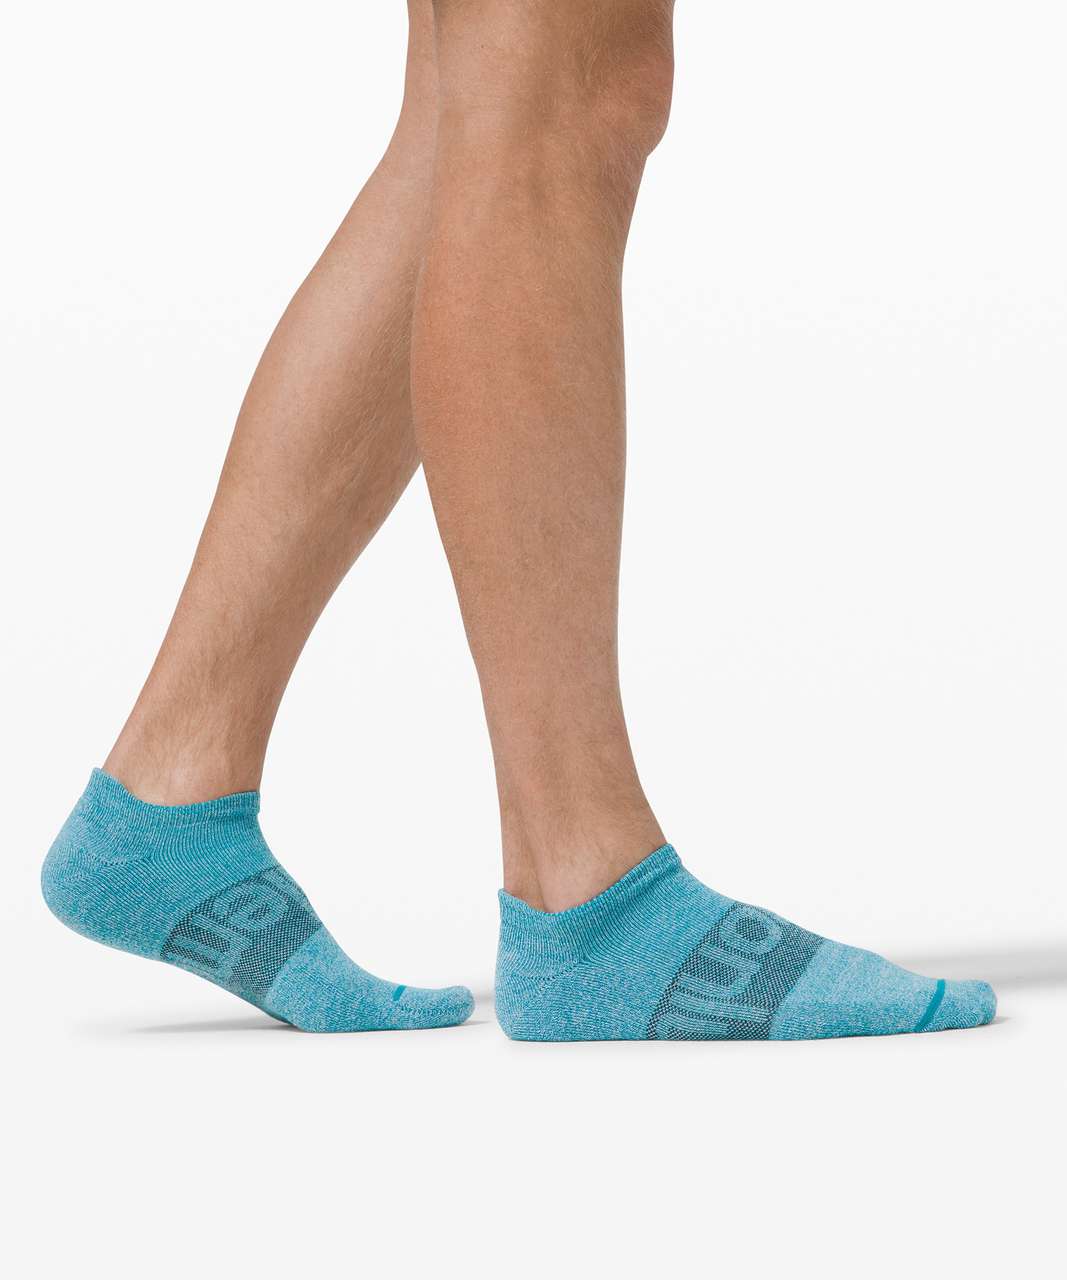 Lululemon Daily Stride Low Ankle Sock *3 Pack - White / Hawaiian Blue / Black